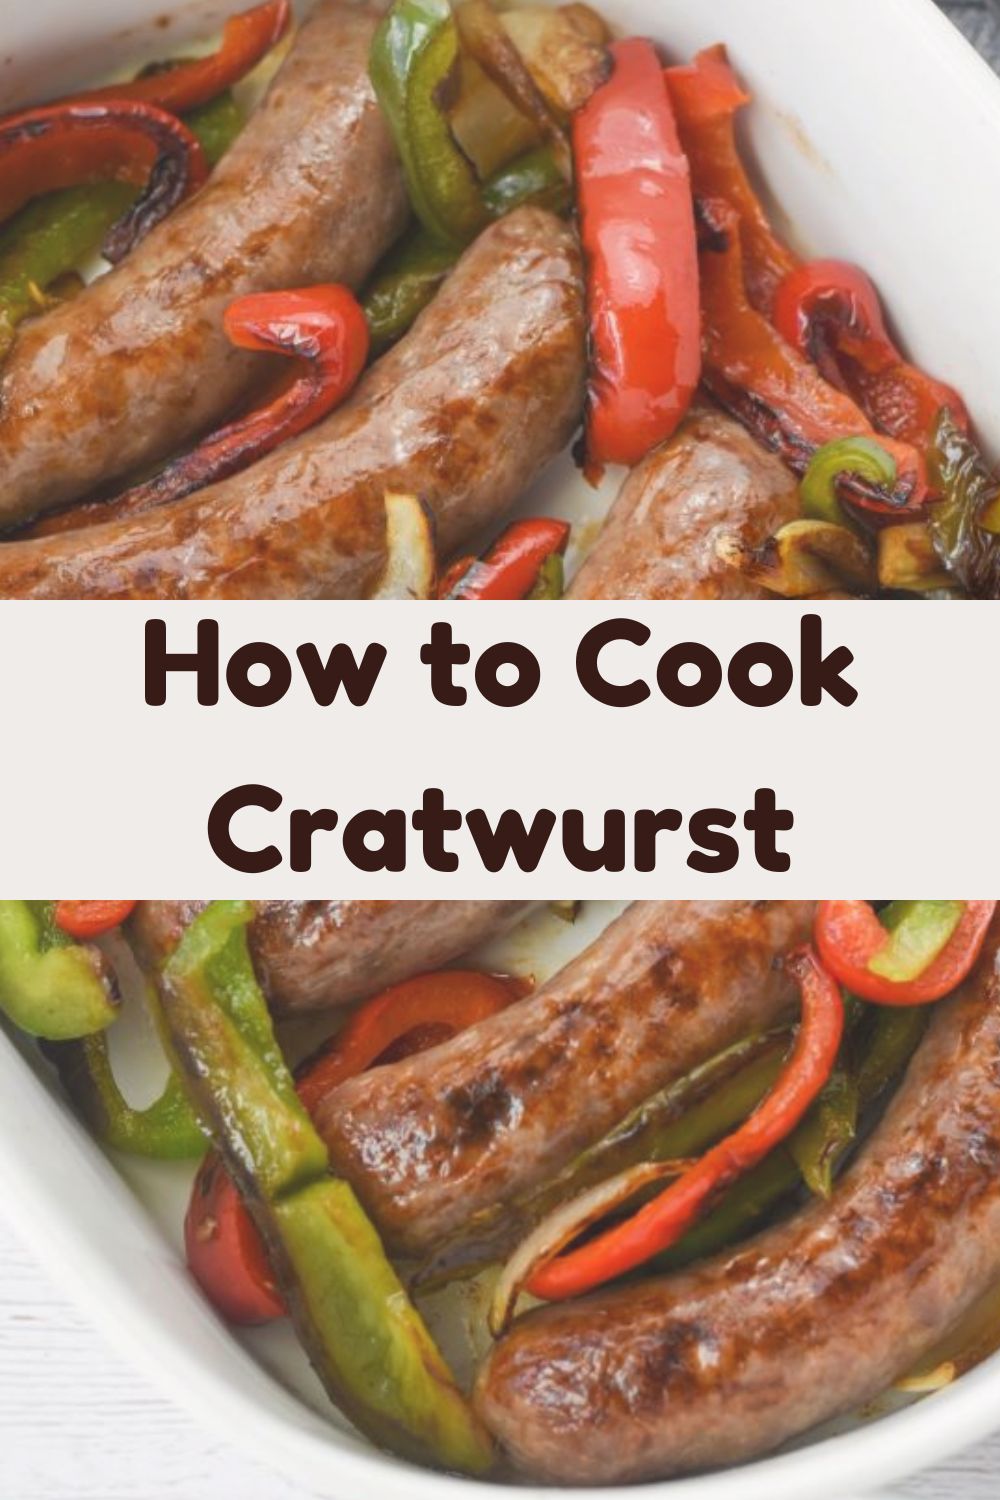 How to Cook Cratwurst